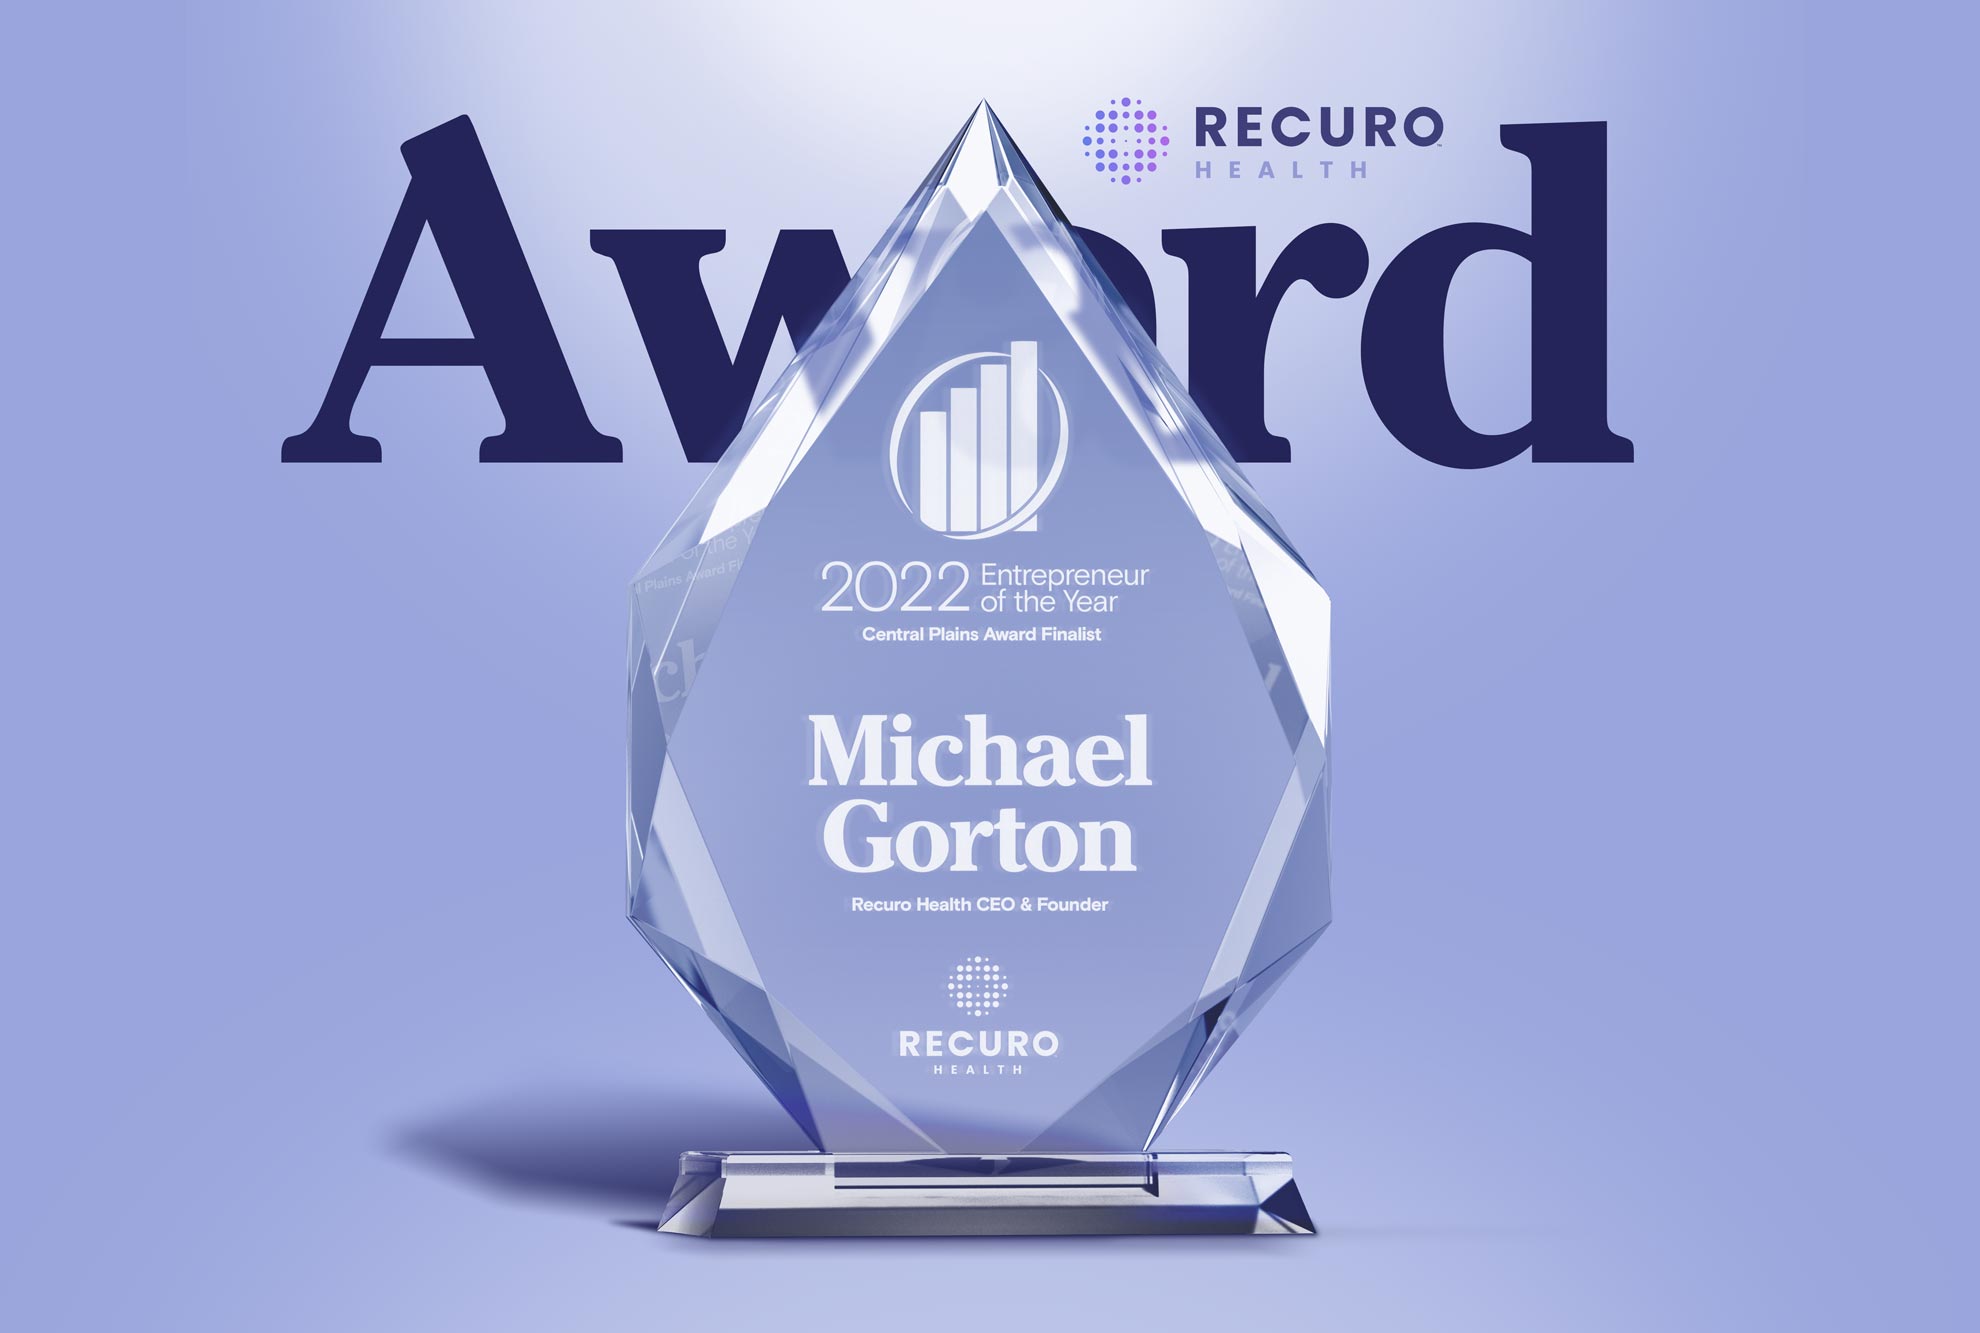 Michael Gorton named Entrepreneur of the Year, 2022 Central Plains Award Finalist